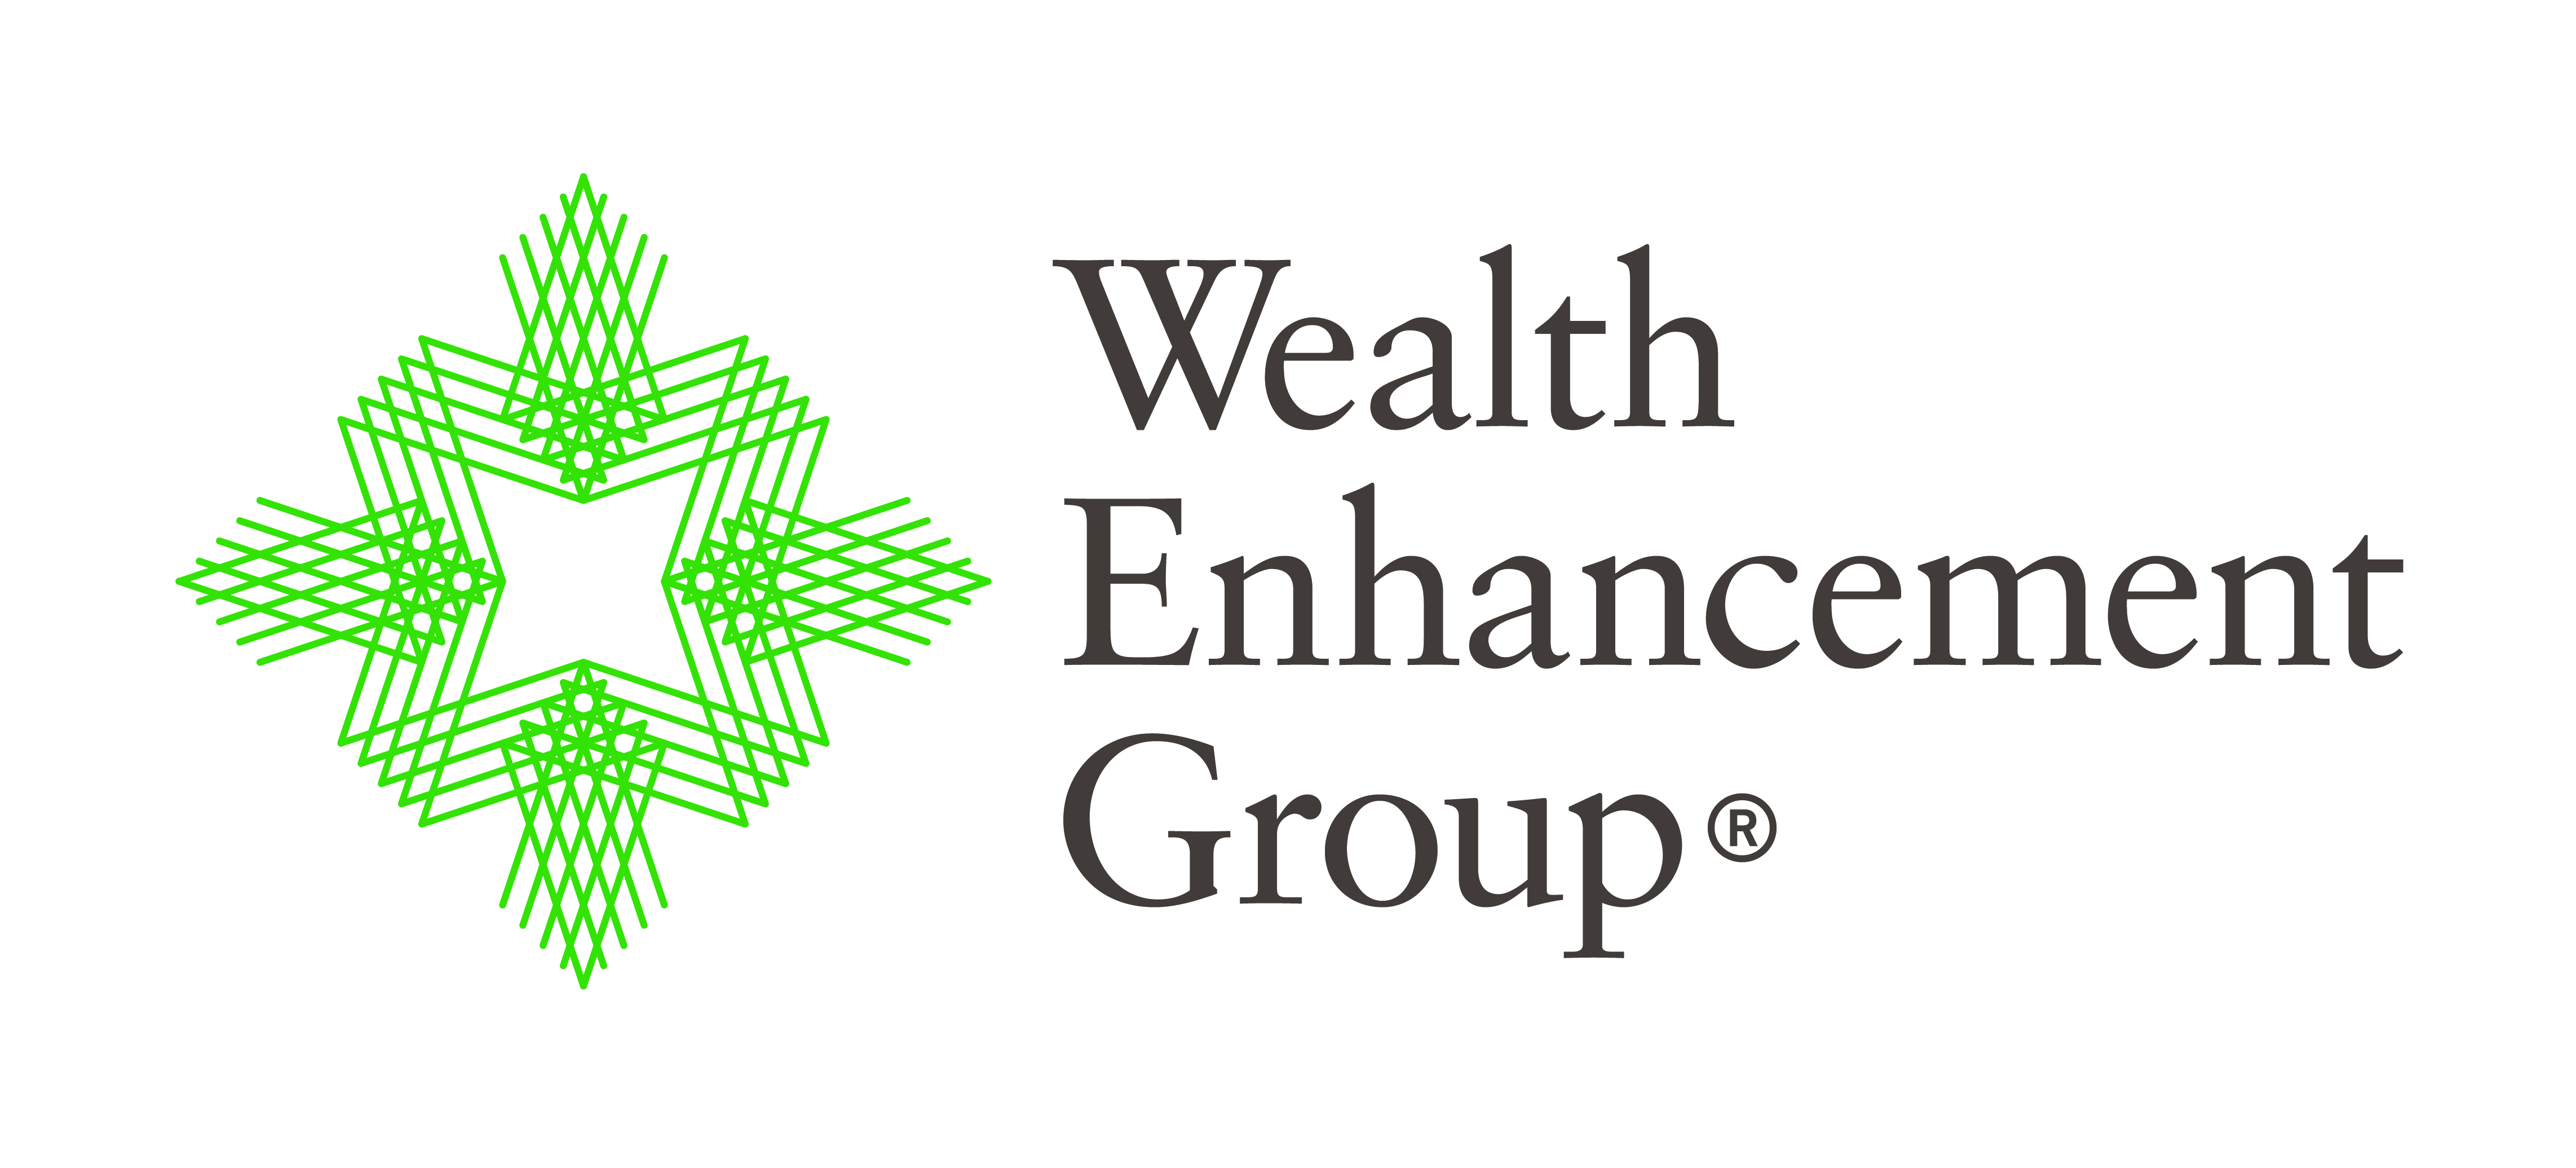 Wealth Enhancement Group, Washington Wealth Team